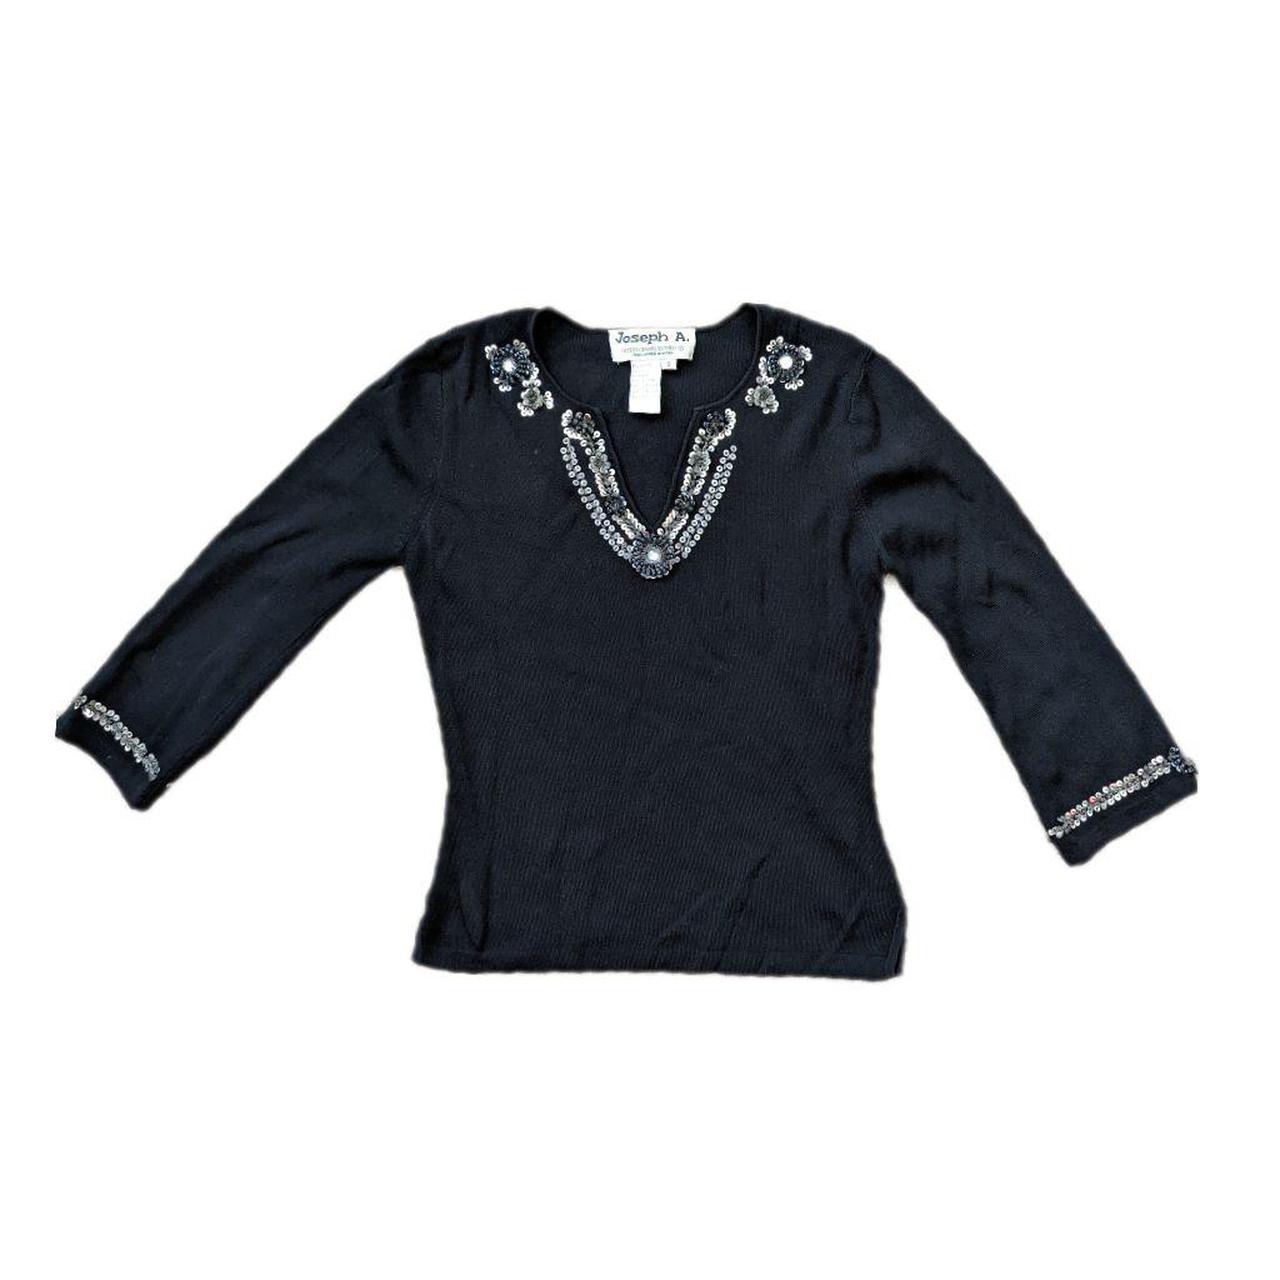 Product Image 1 - Title: Joseph A. Black Sweater